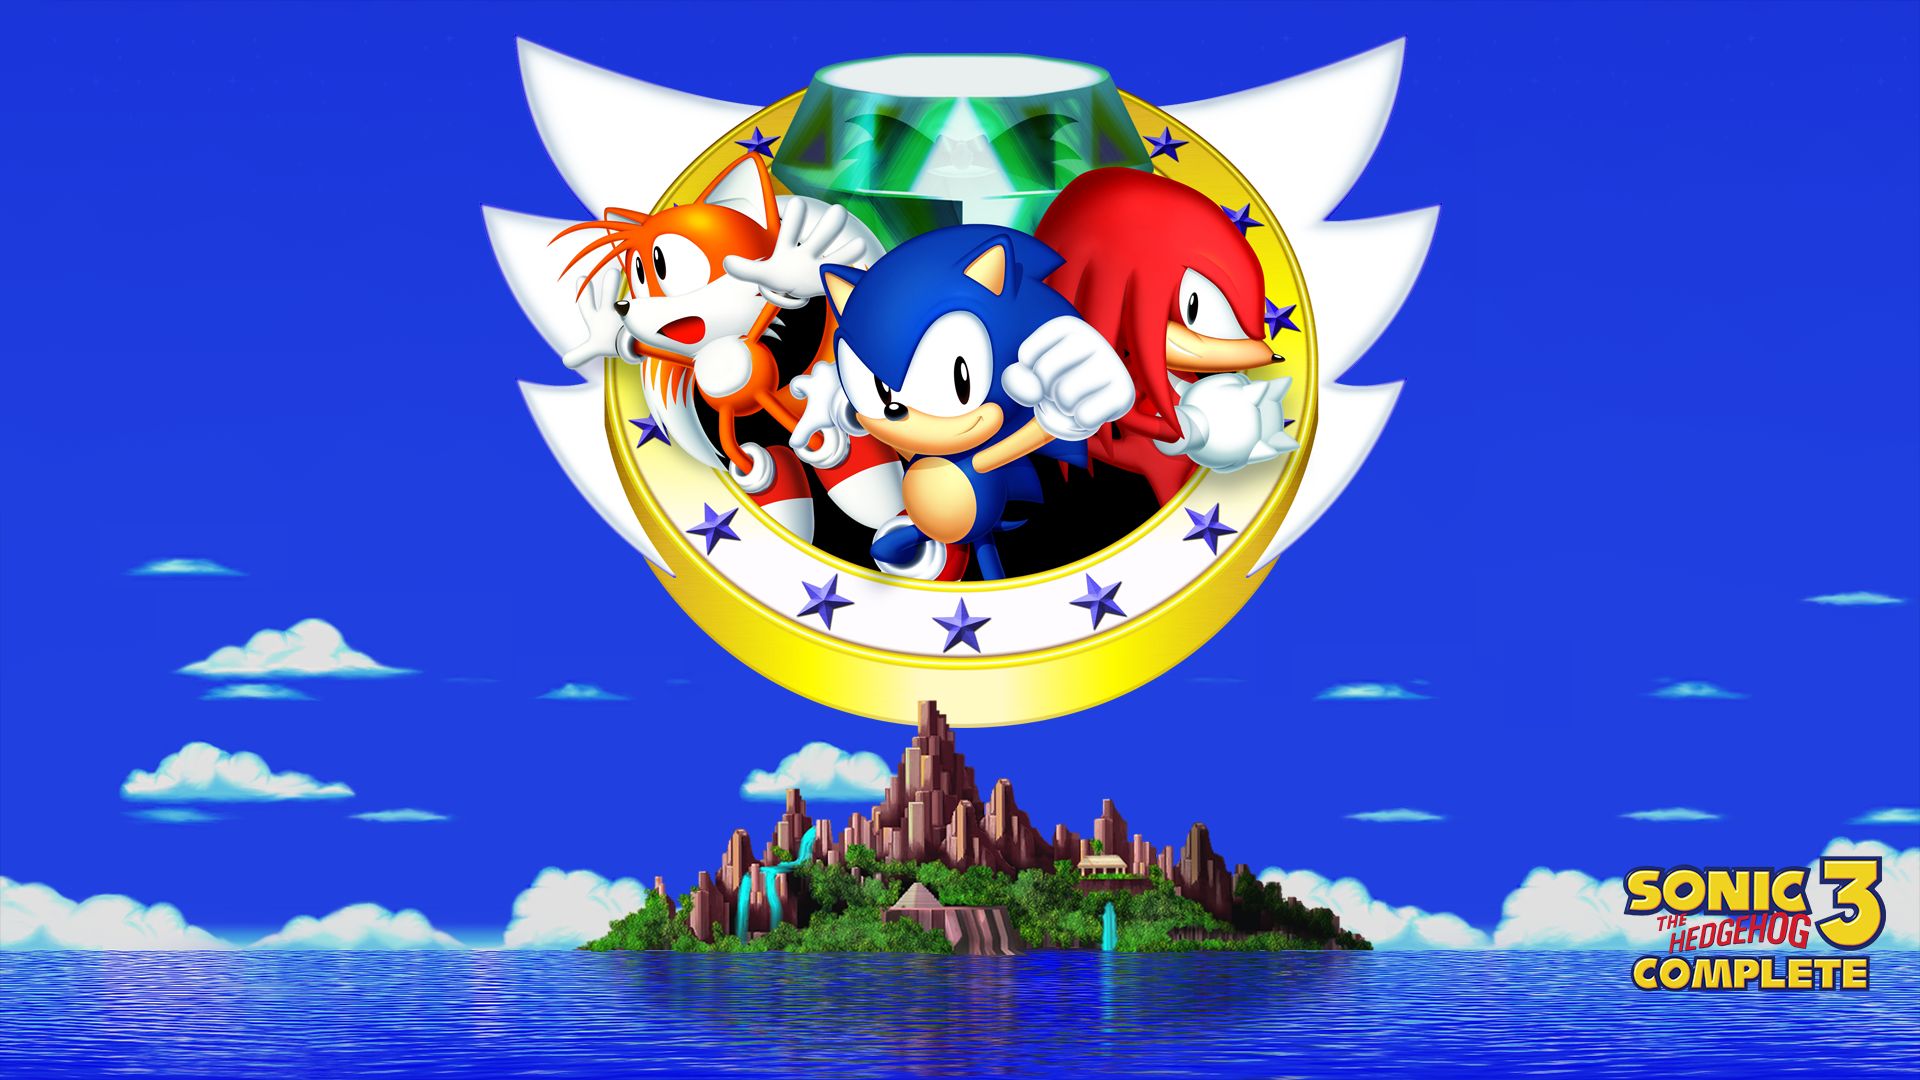 Sonic The Hedgehog Backgrounds High Quality  PixelsTalk.Net